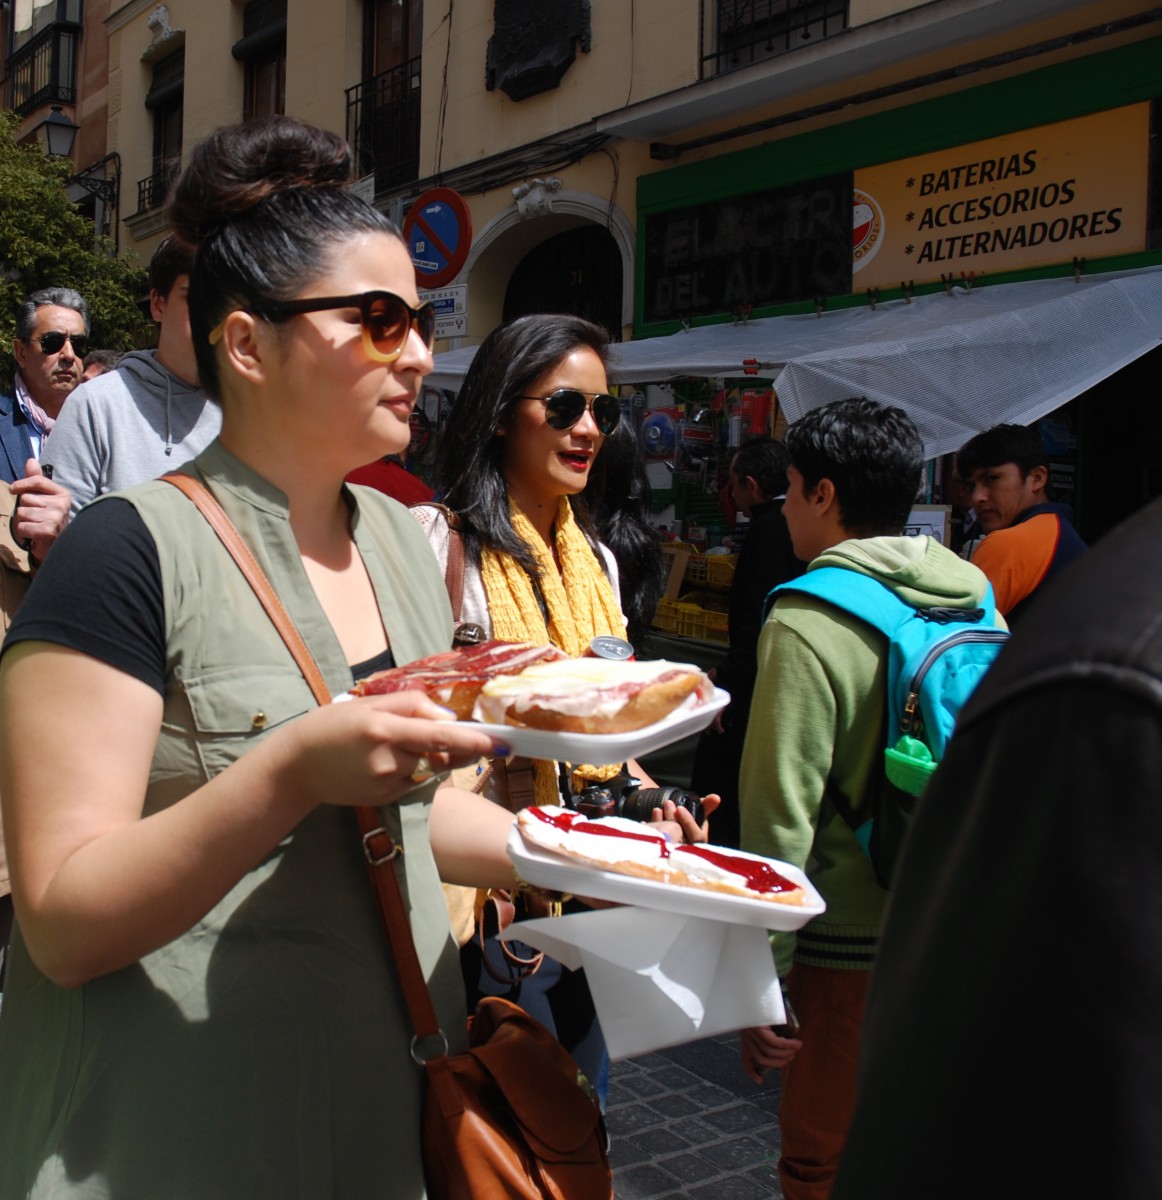 Comida en la calle en el Rastro de Madrid #streetfood The Foodie Studies